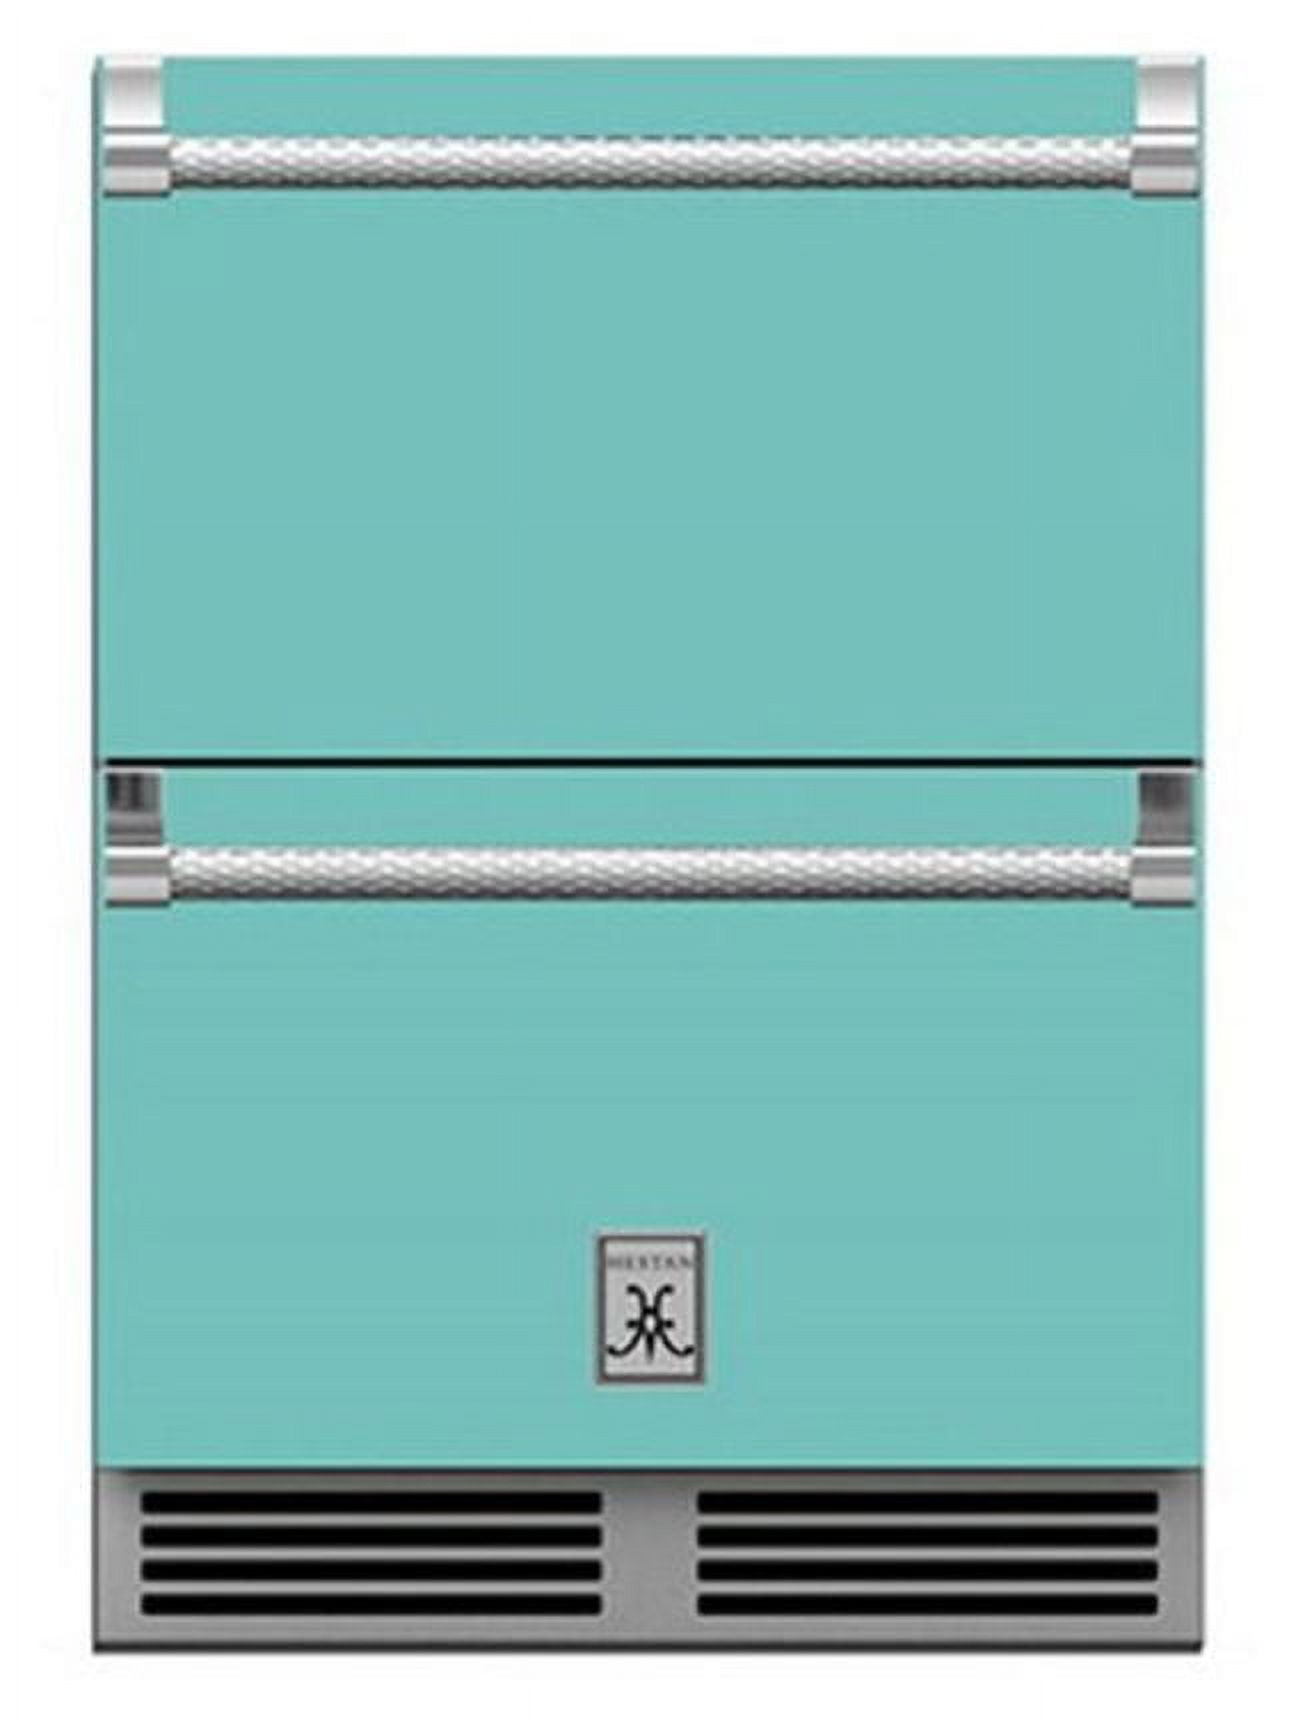 Hestan GRF Series 5.2 Cu. ft. Citra Outdoor Refrigerator and Freezer Drawer